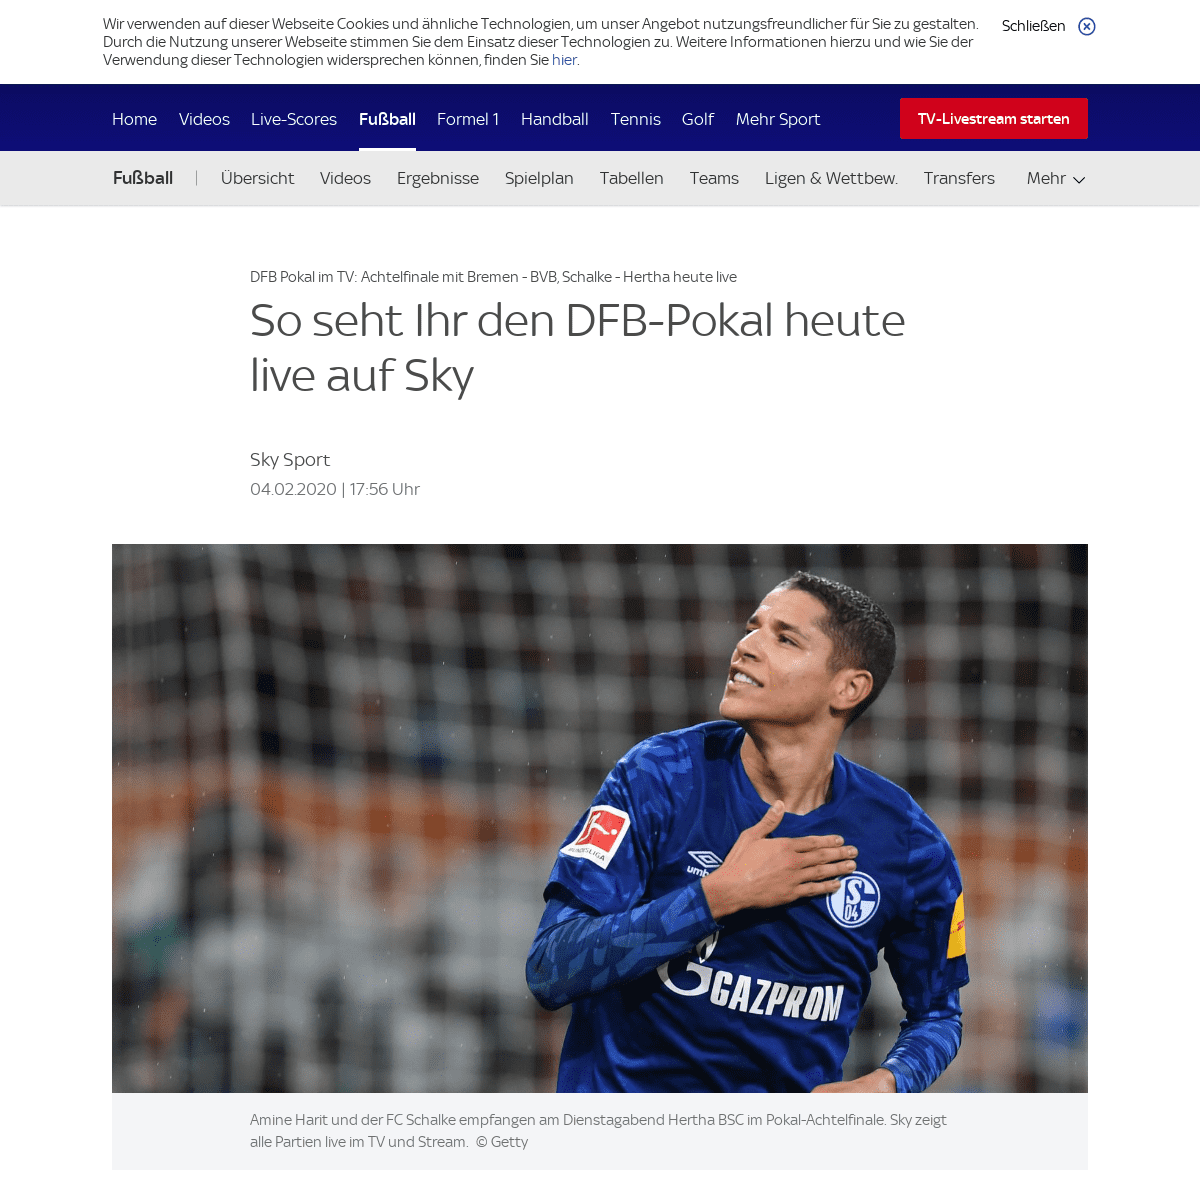 A complete backup of sport.sky.de/fussball/artikel/dfb-pokal-im-tv-achtelfinale-mit-bremen-bvb-schalke-hertha-heute-live/1192607